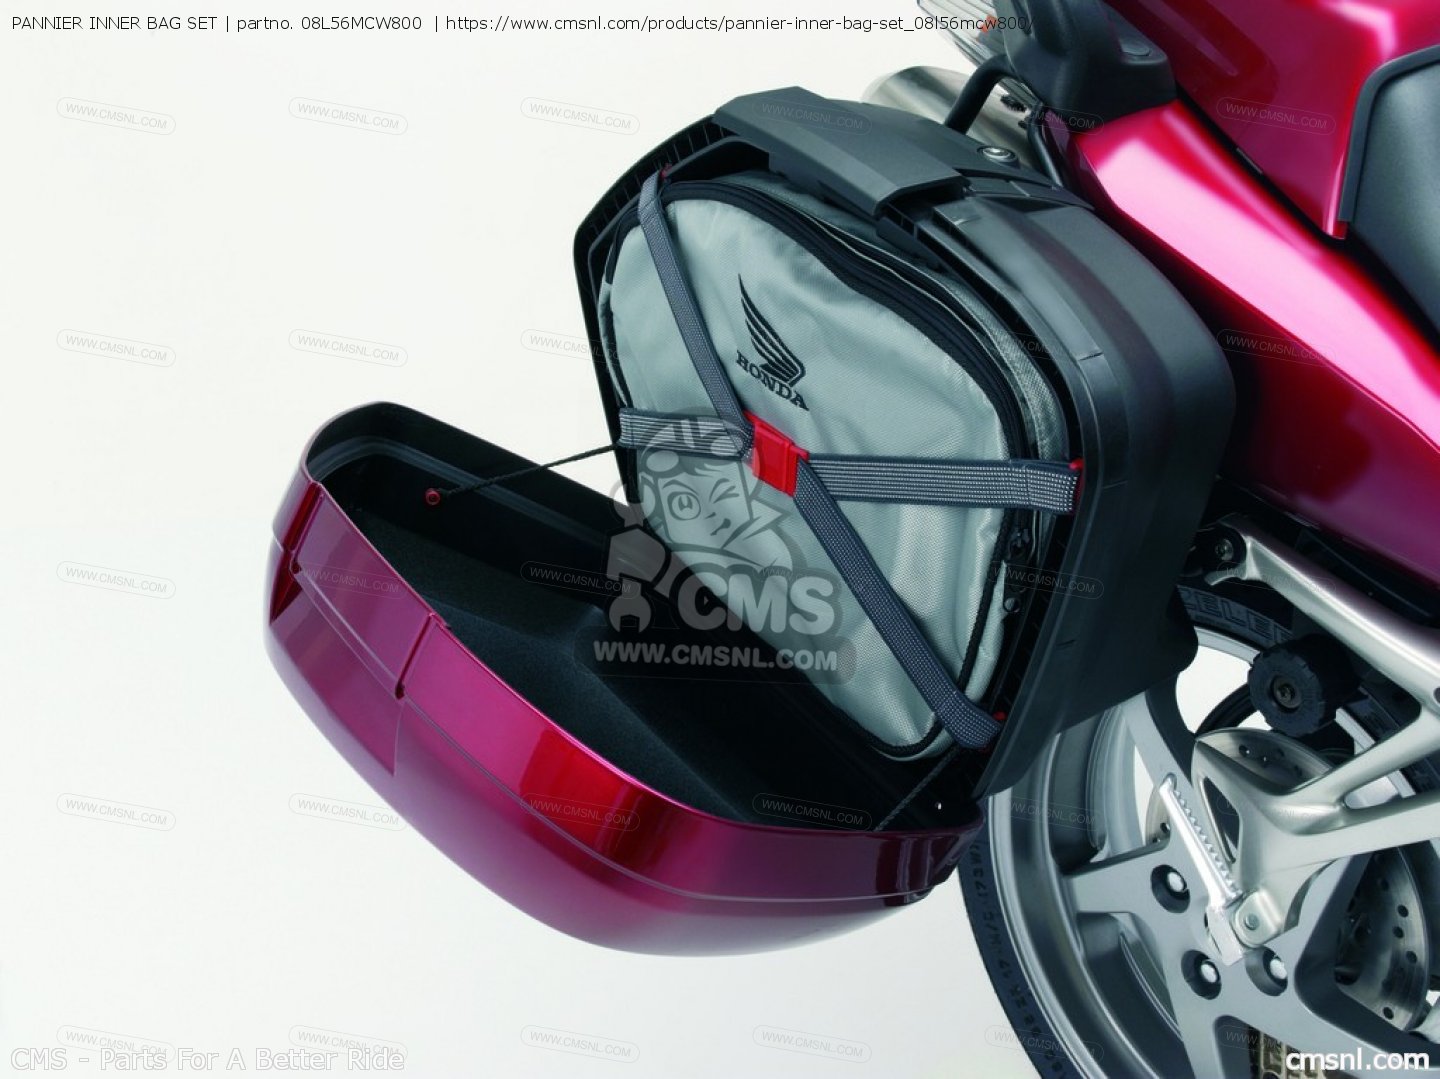 Honda vfr800 pannier inner bags #3